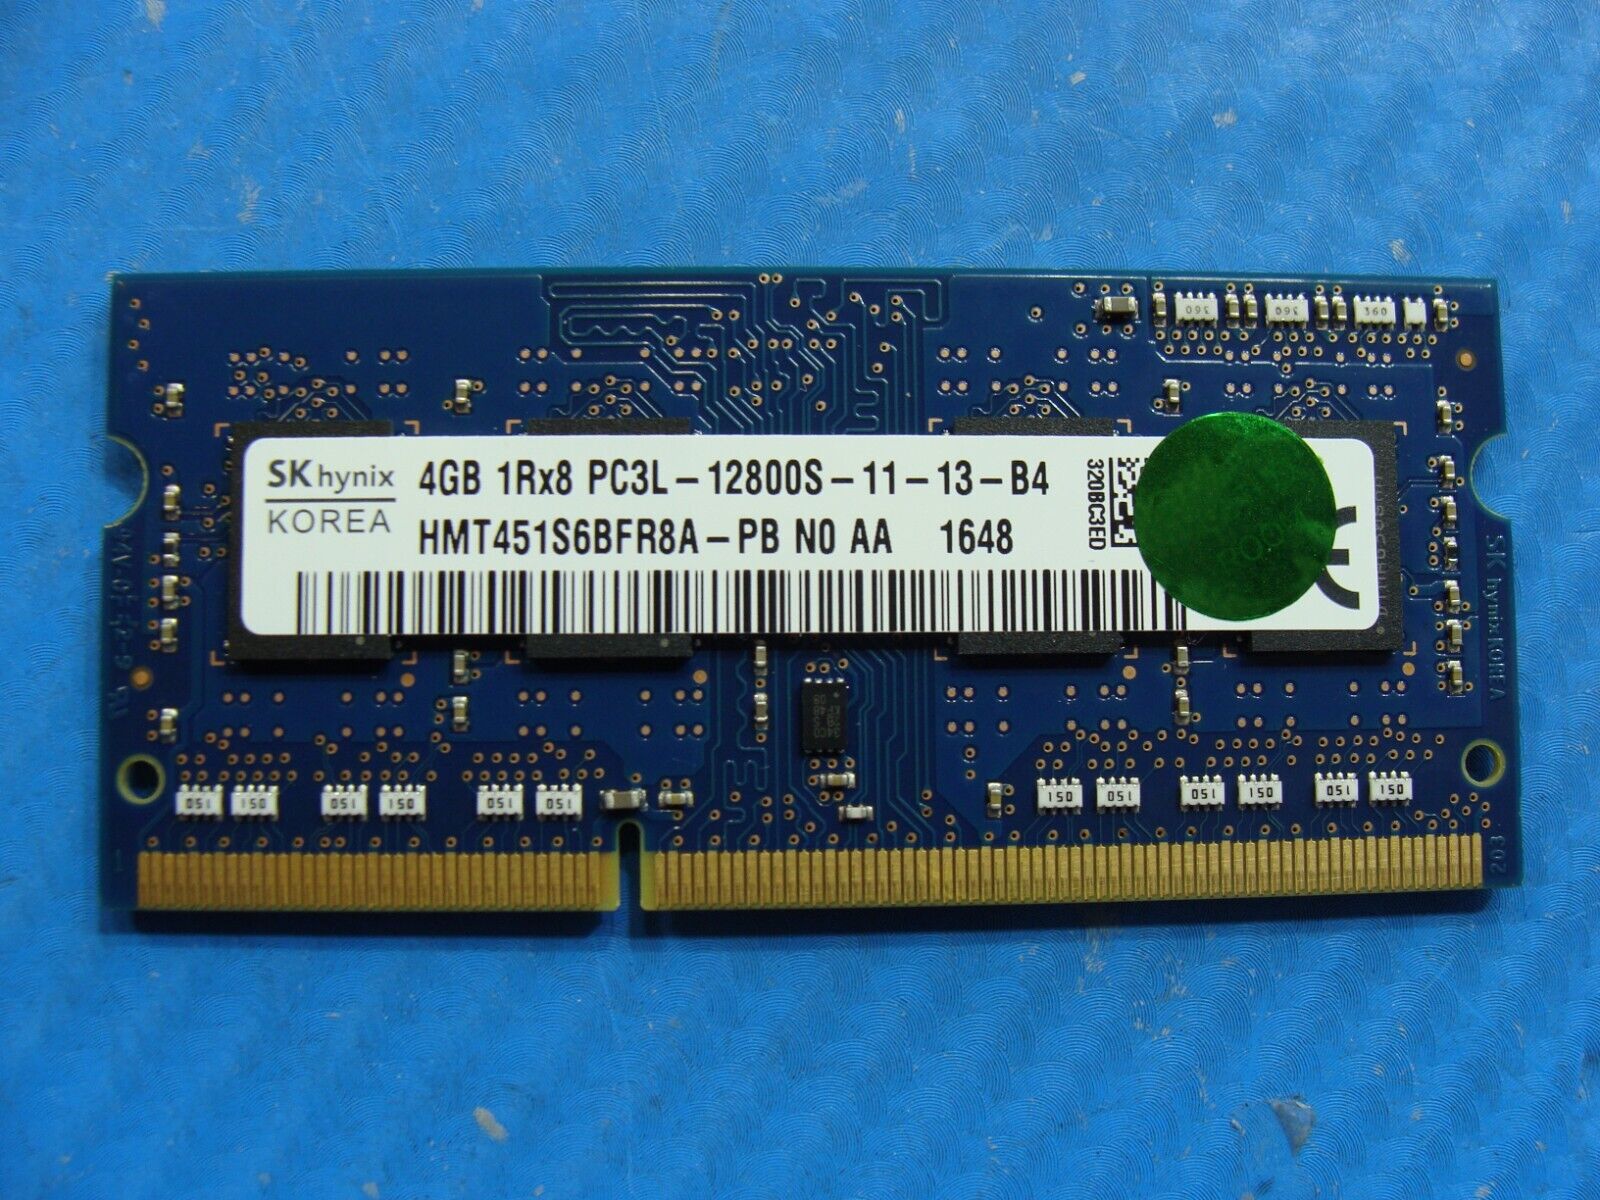 Dell 3470 SK Hynix 4GB 1Rx8 PC3L-12800S Memory RAM SO-DIMM HMT451S6BFR8A-PB